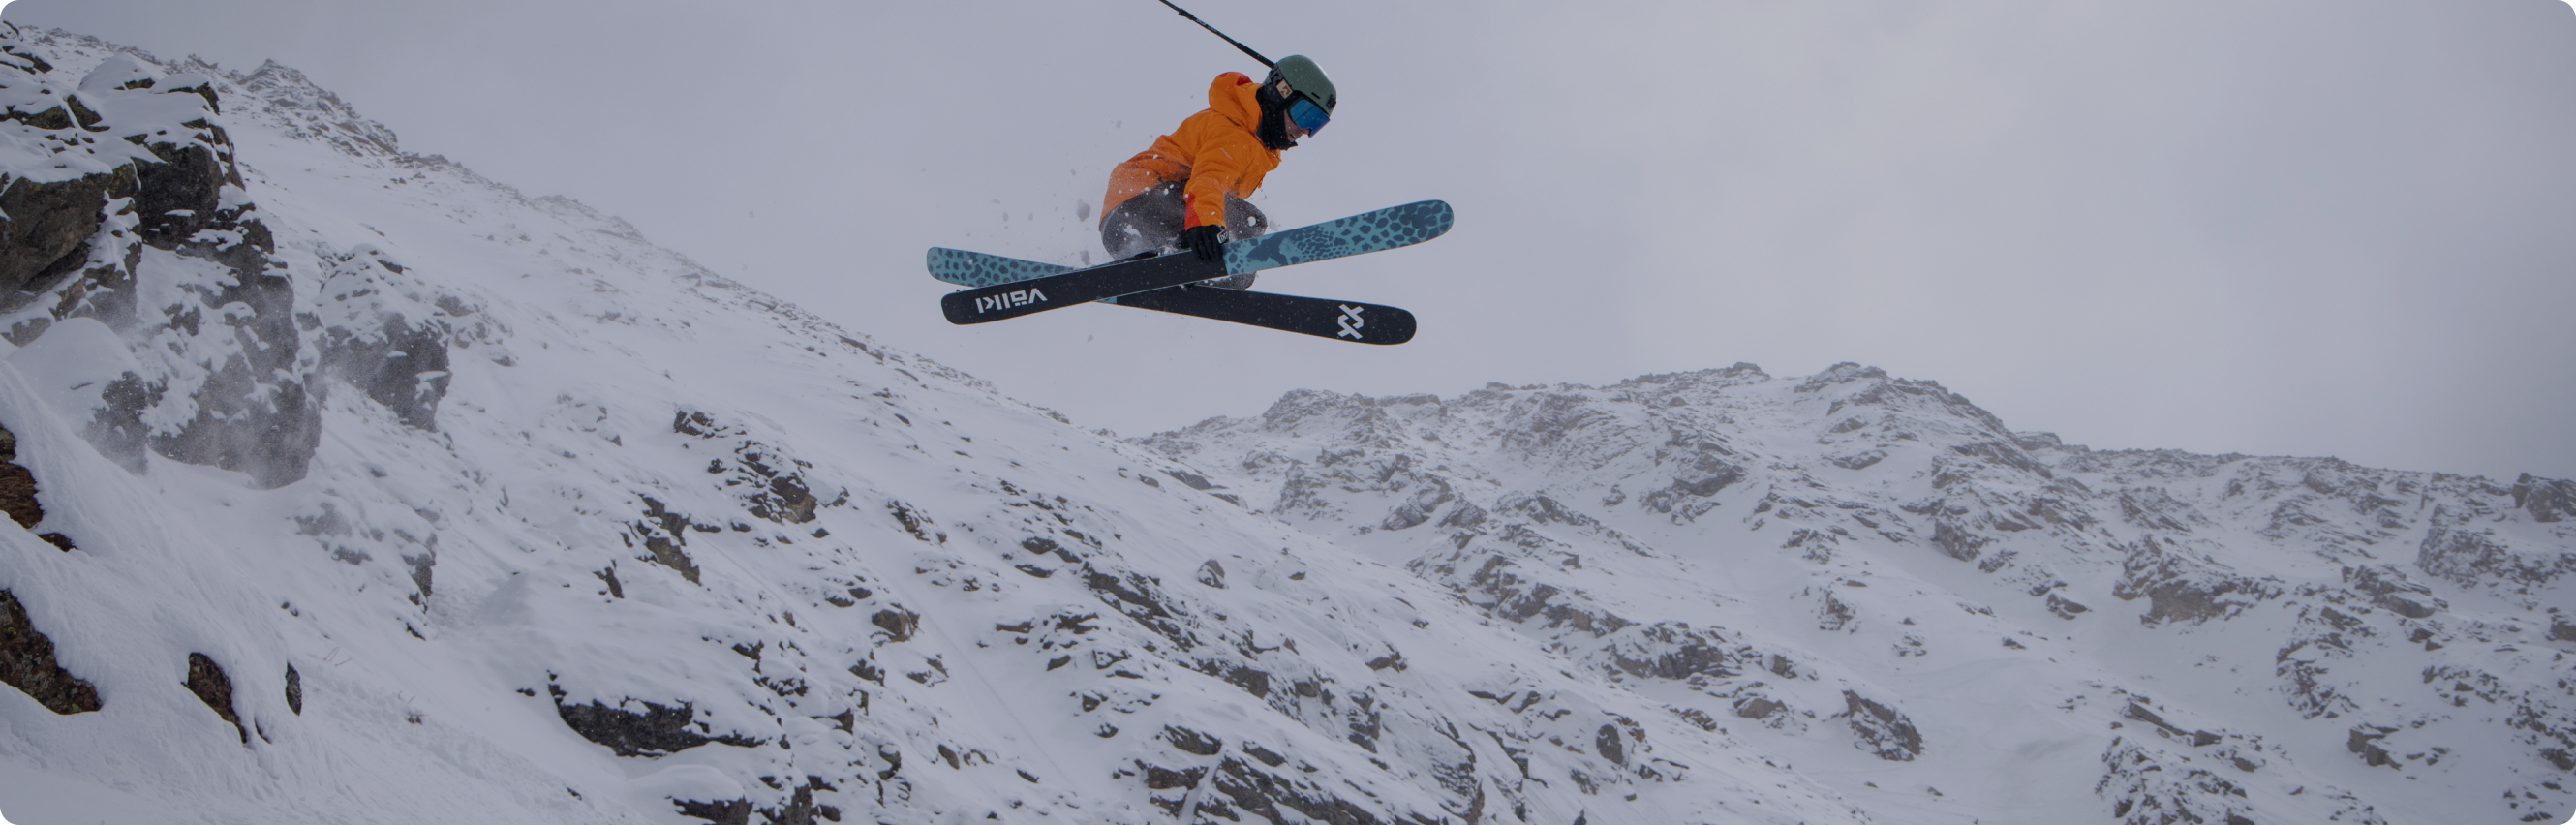 skier getting air